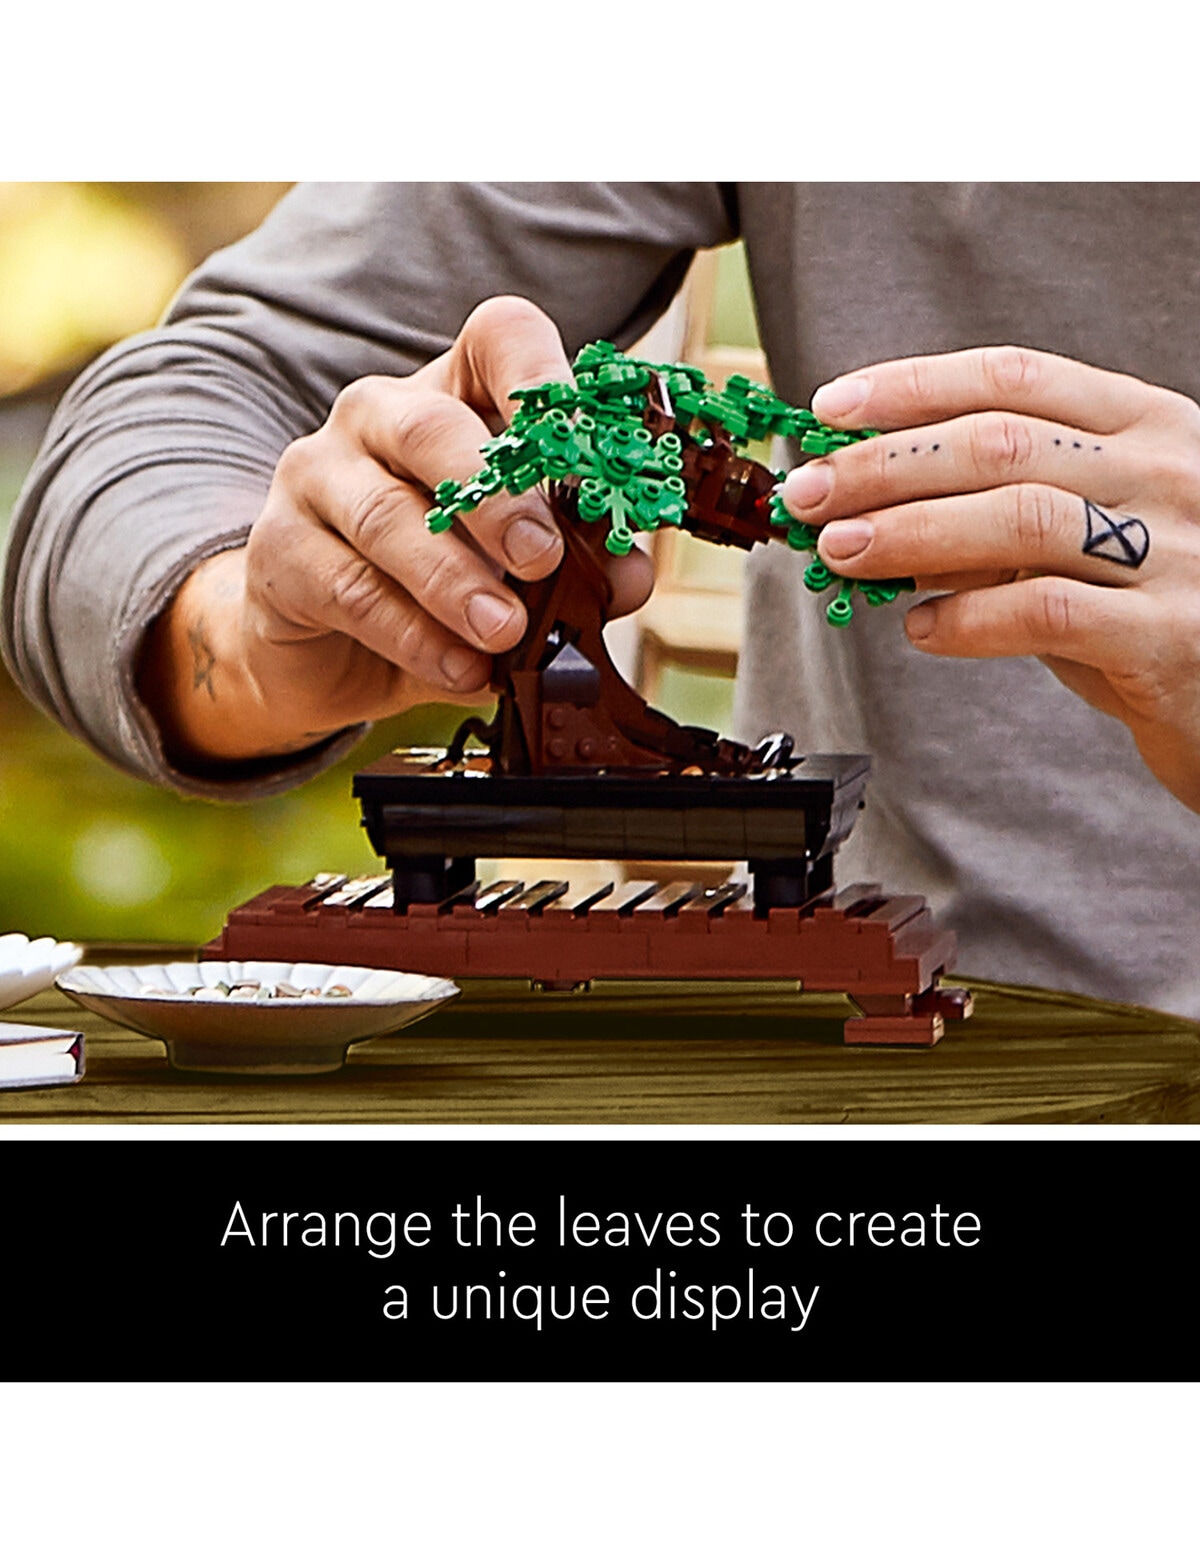 LEGO Creator Expert Botanical Collection - Bonsai Tree, 10281 - Lego &  Construction